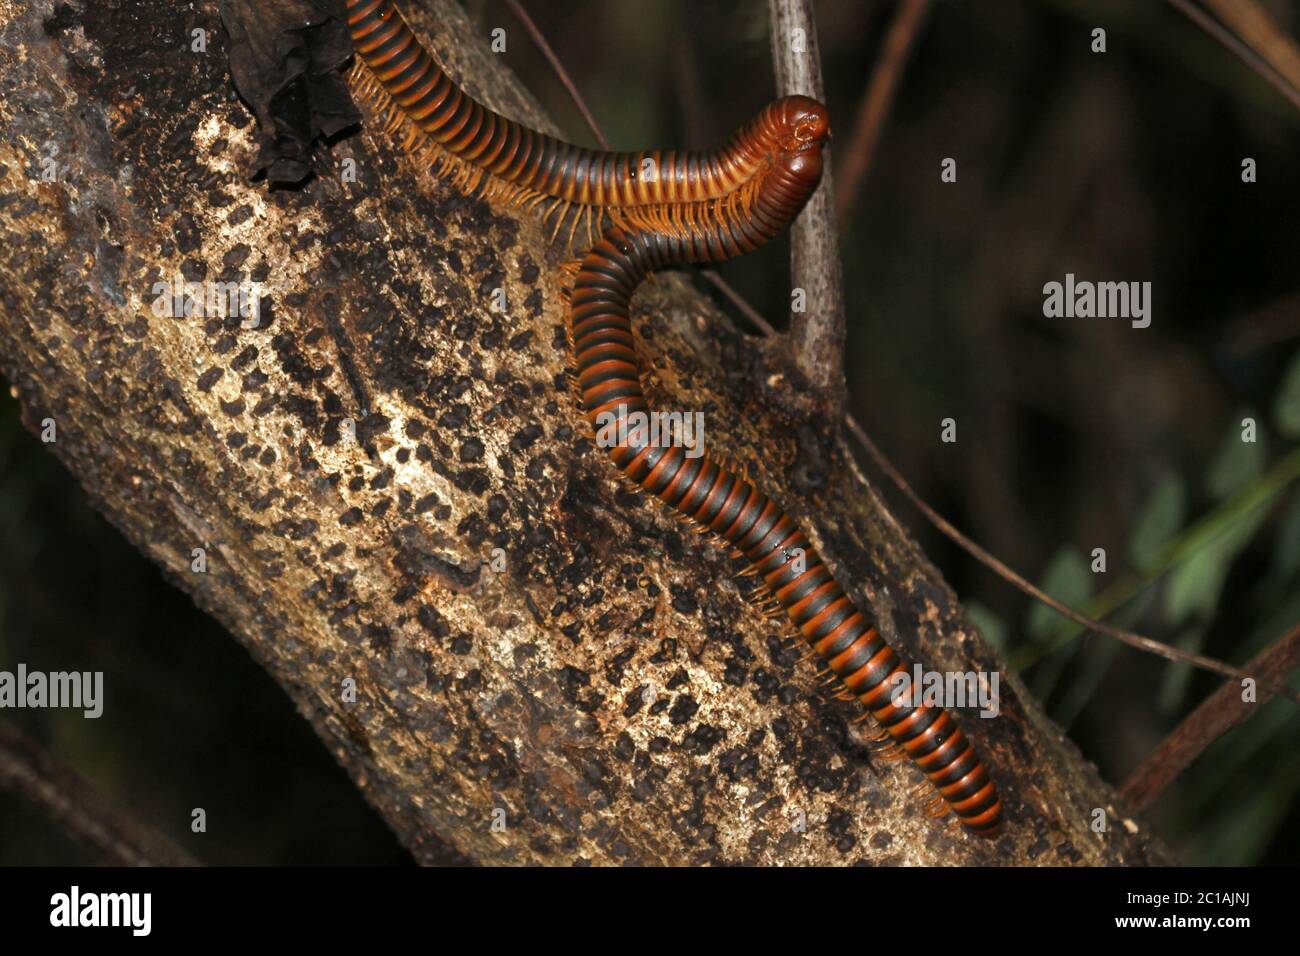 Giant African millipede or shongololo, (Archispirostreptus gigas), couple mating on branch, Nosy Komba Island, Madagascar. Stock Photo